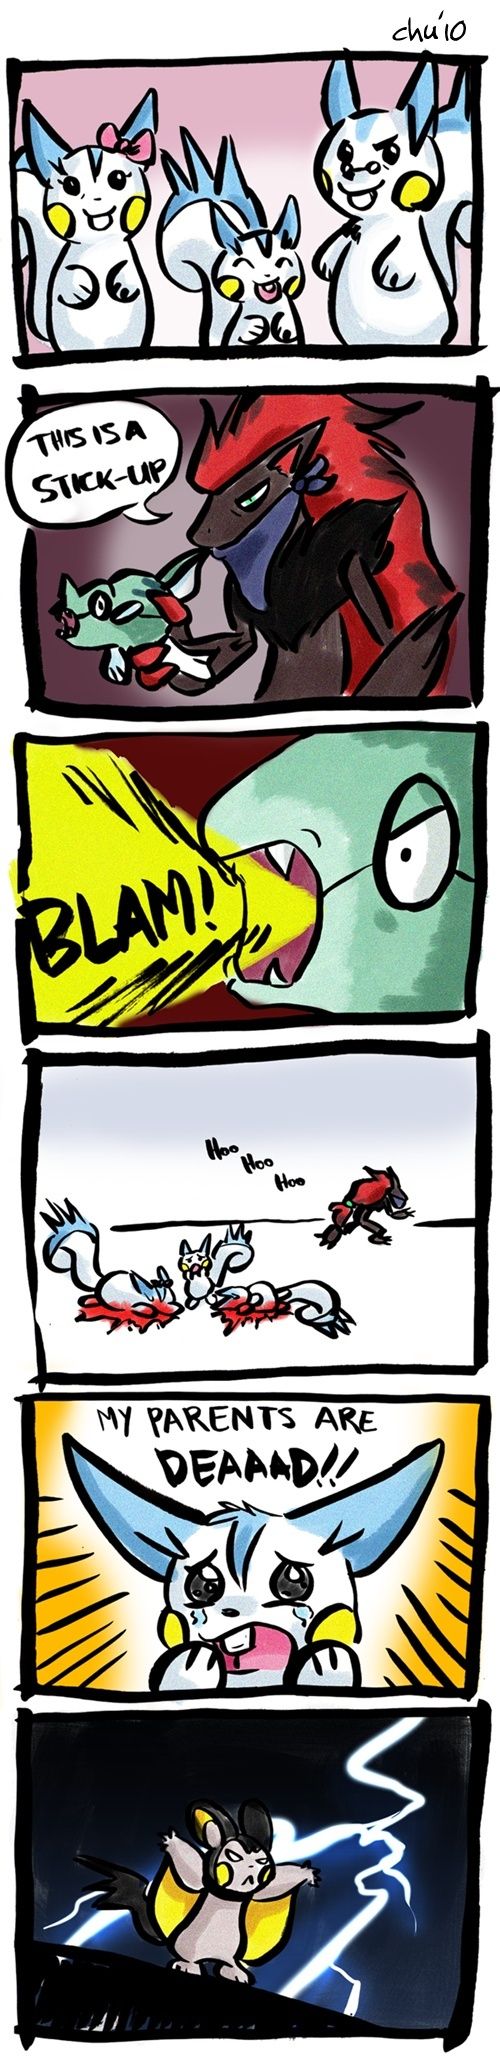 Funny Pokémon related comic 12816910